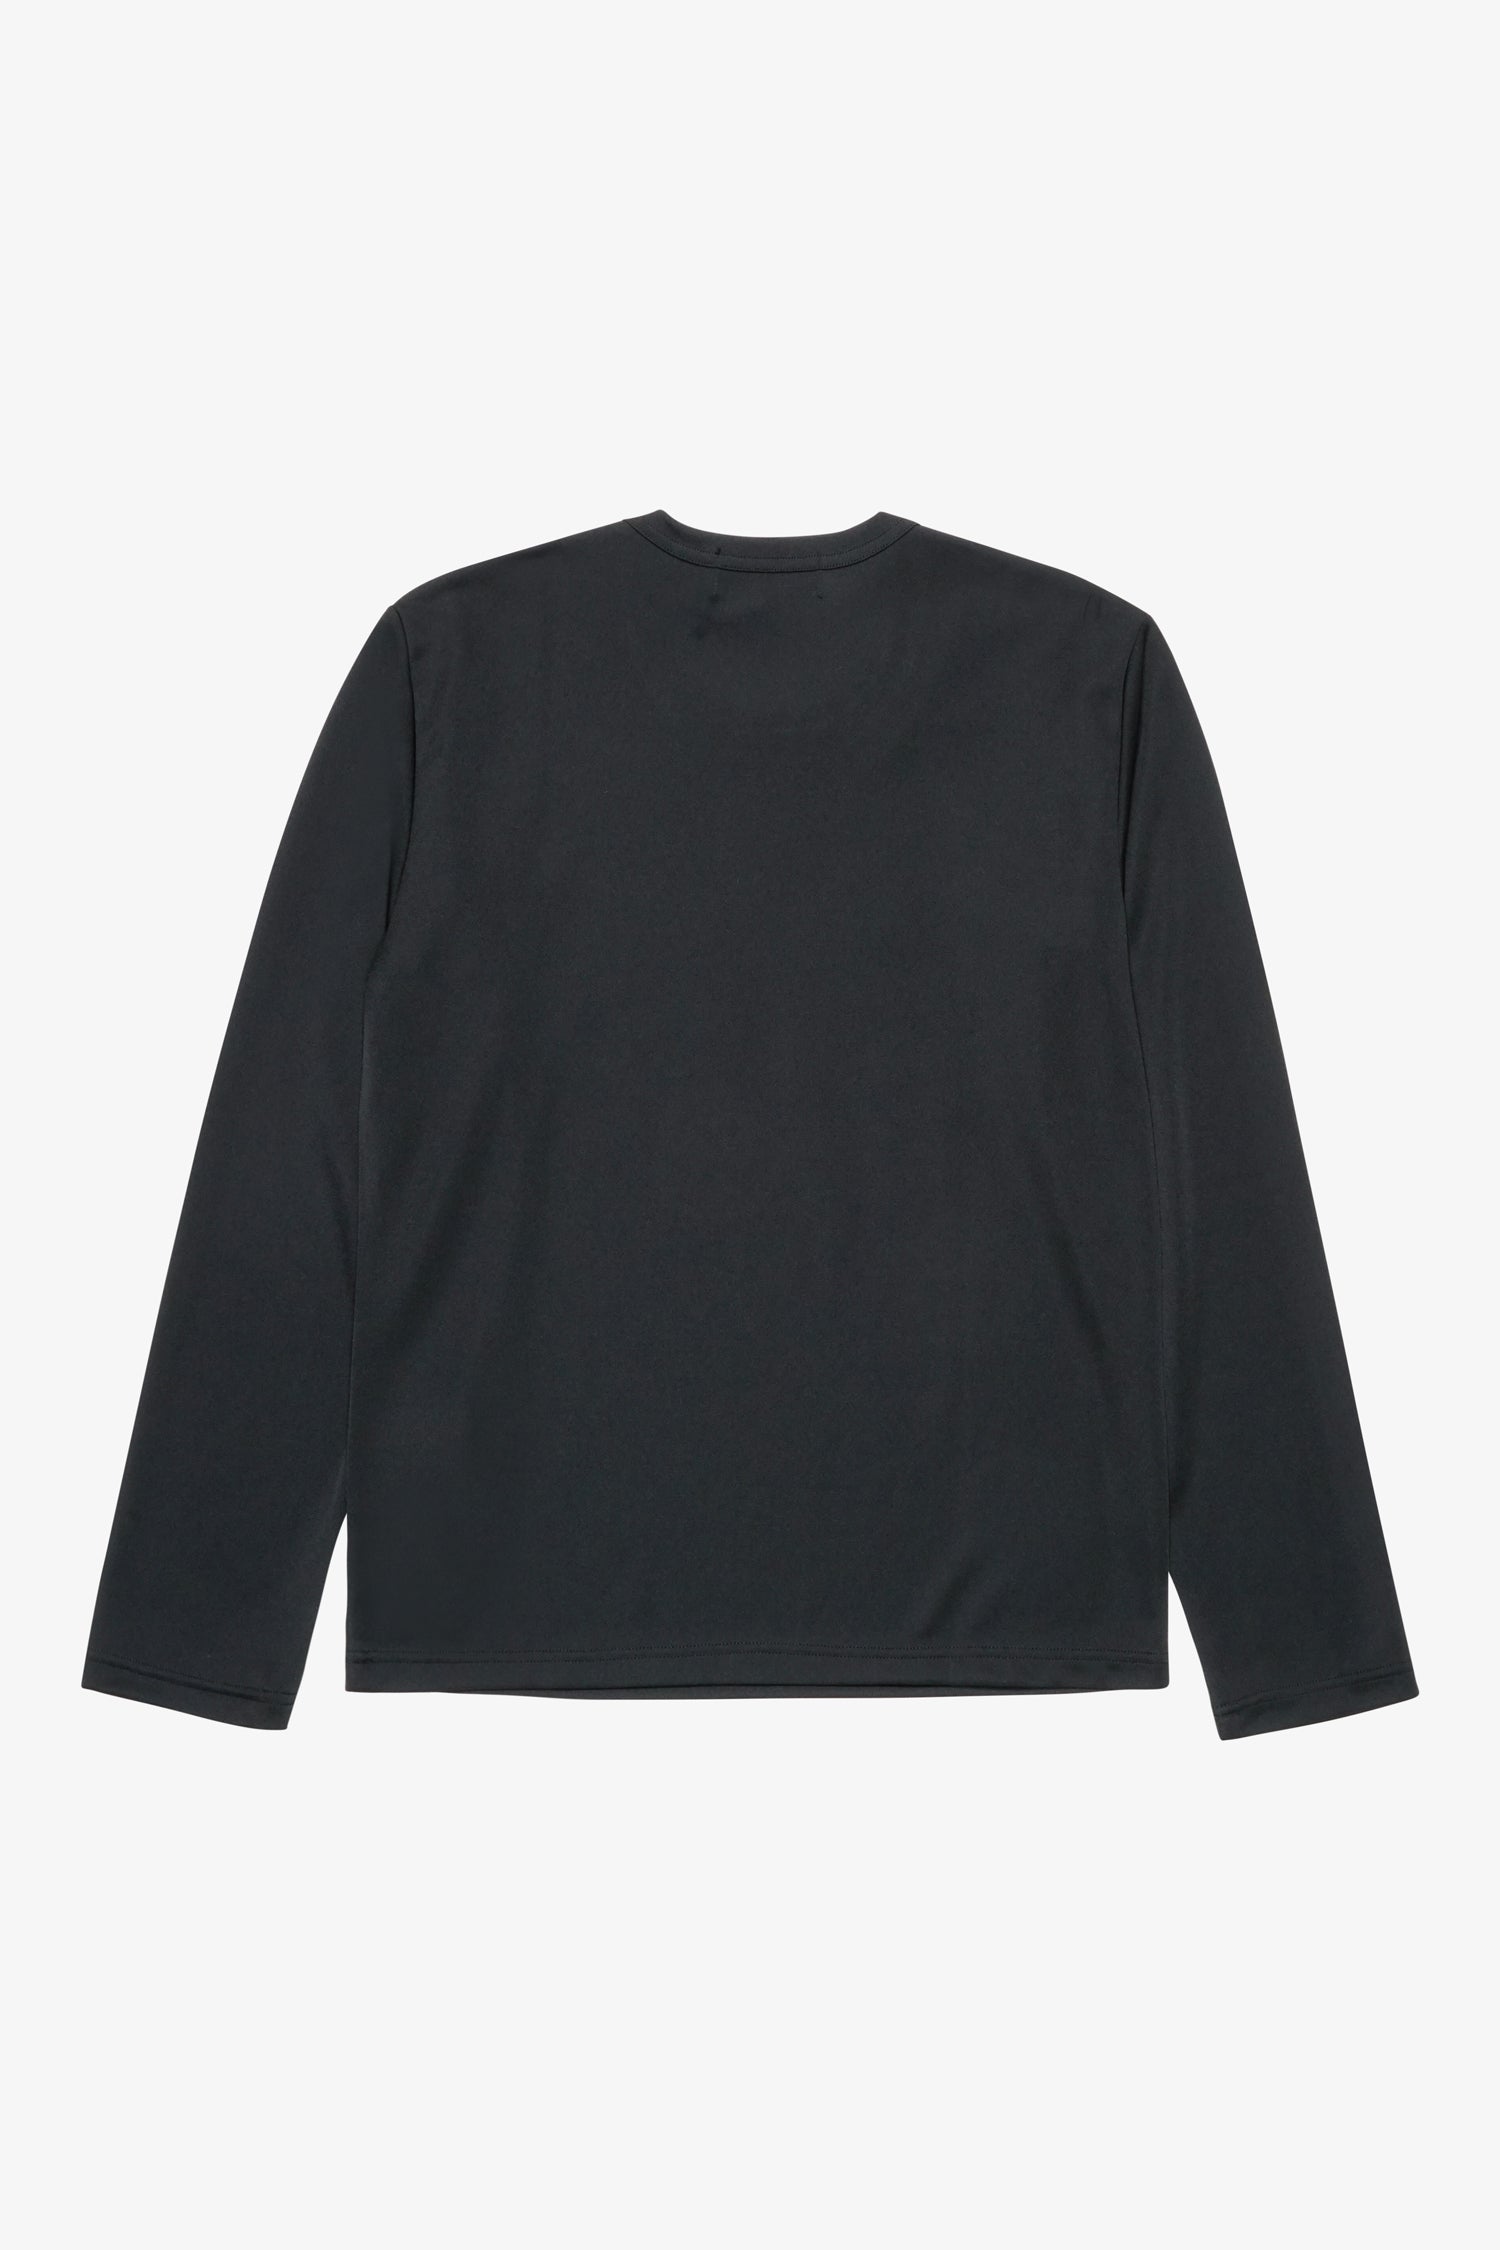 Selectshop FRAME - COMME DES GARCONS BLACK Nike Air Ringer Longsleeve T-Shirts Dubai